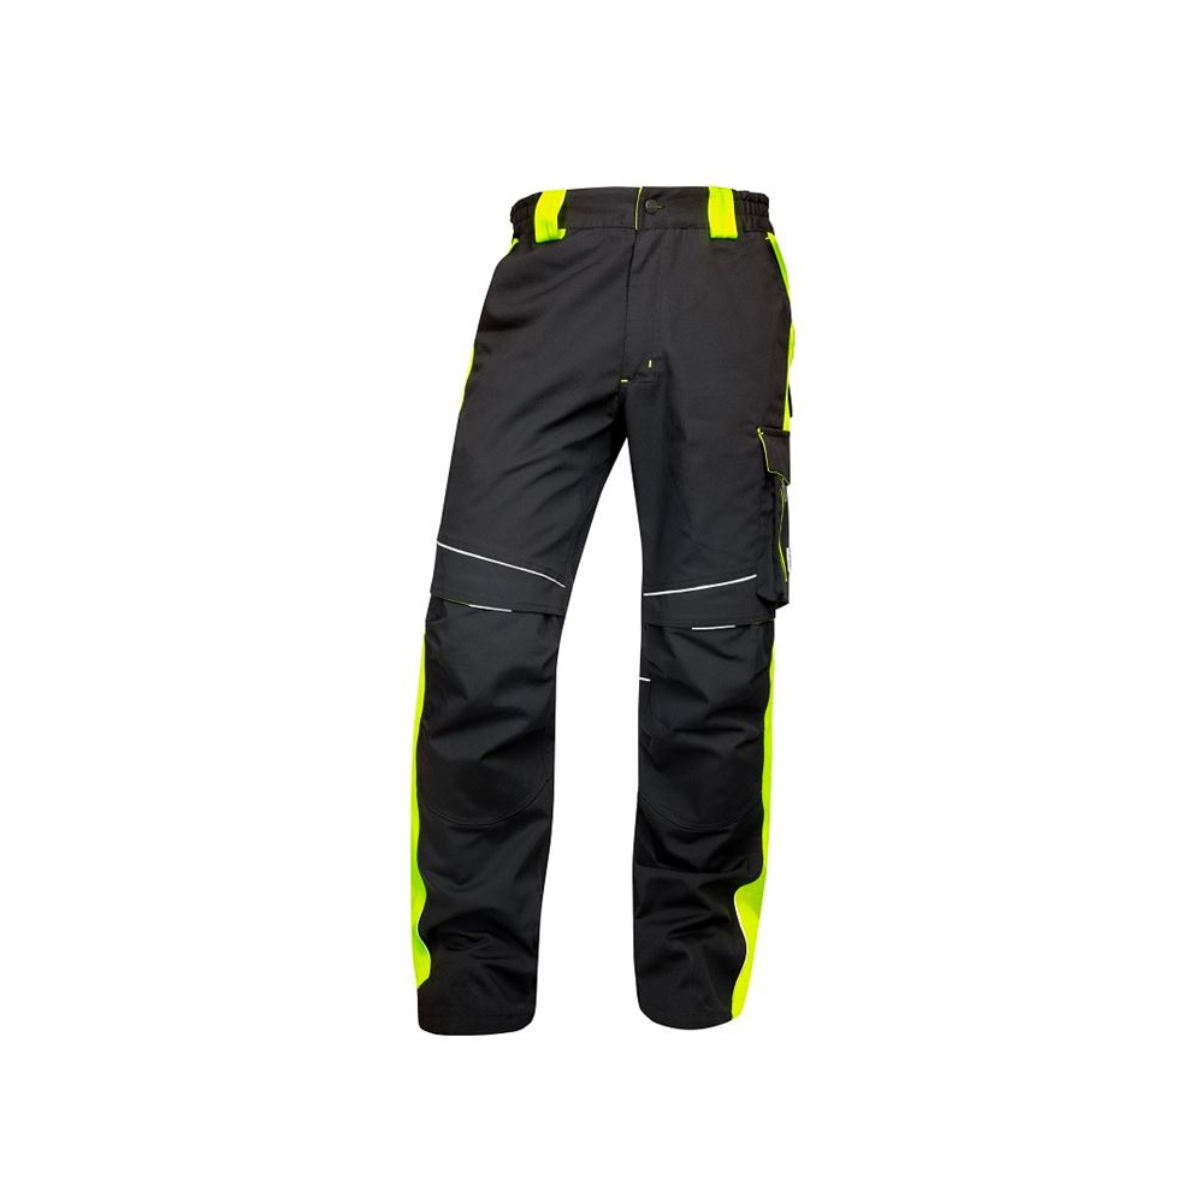 Pantaloni de Iarna, Neon, Negru-galben, Rezistenti, Flexibili, Izolati Termic, Poliester si Bumbac, Barbati